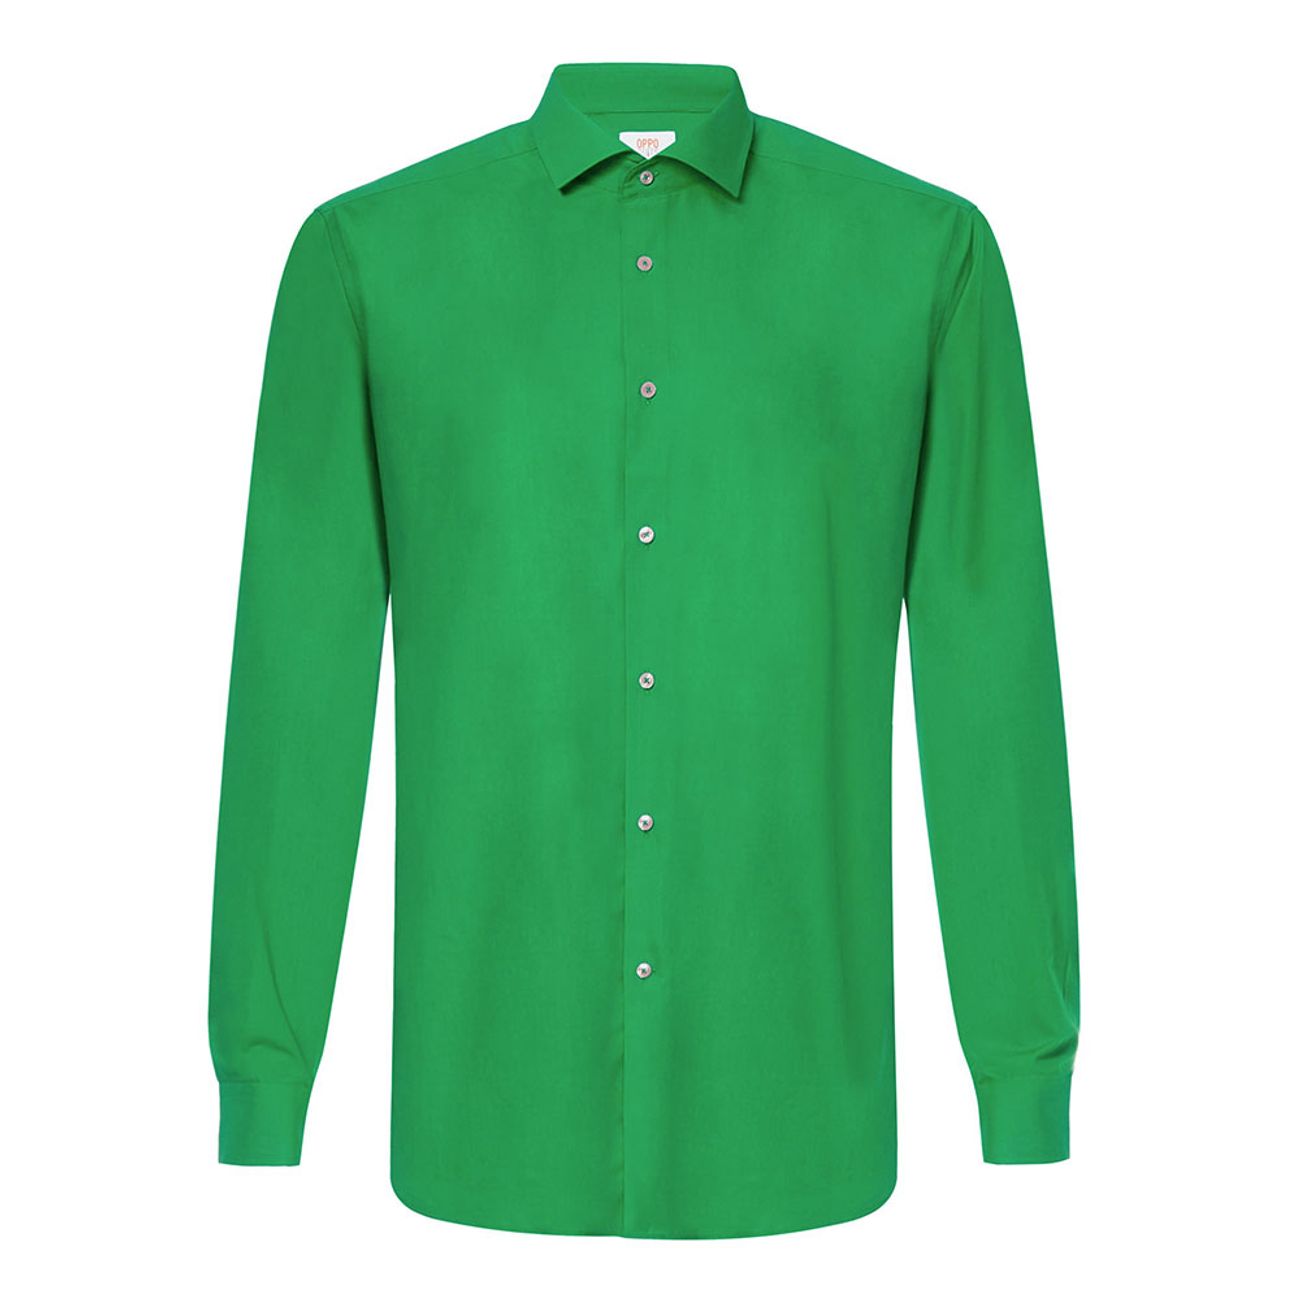 opposuits-evergreen-skjorta-3